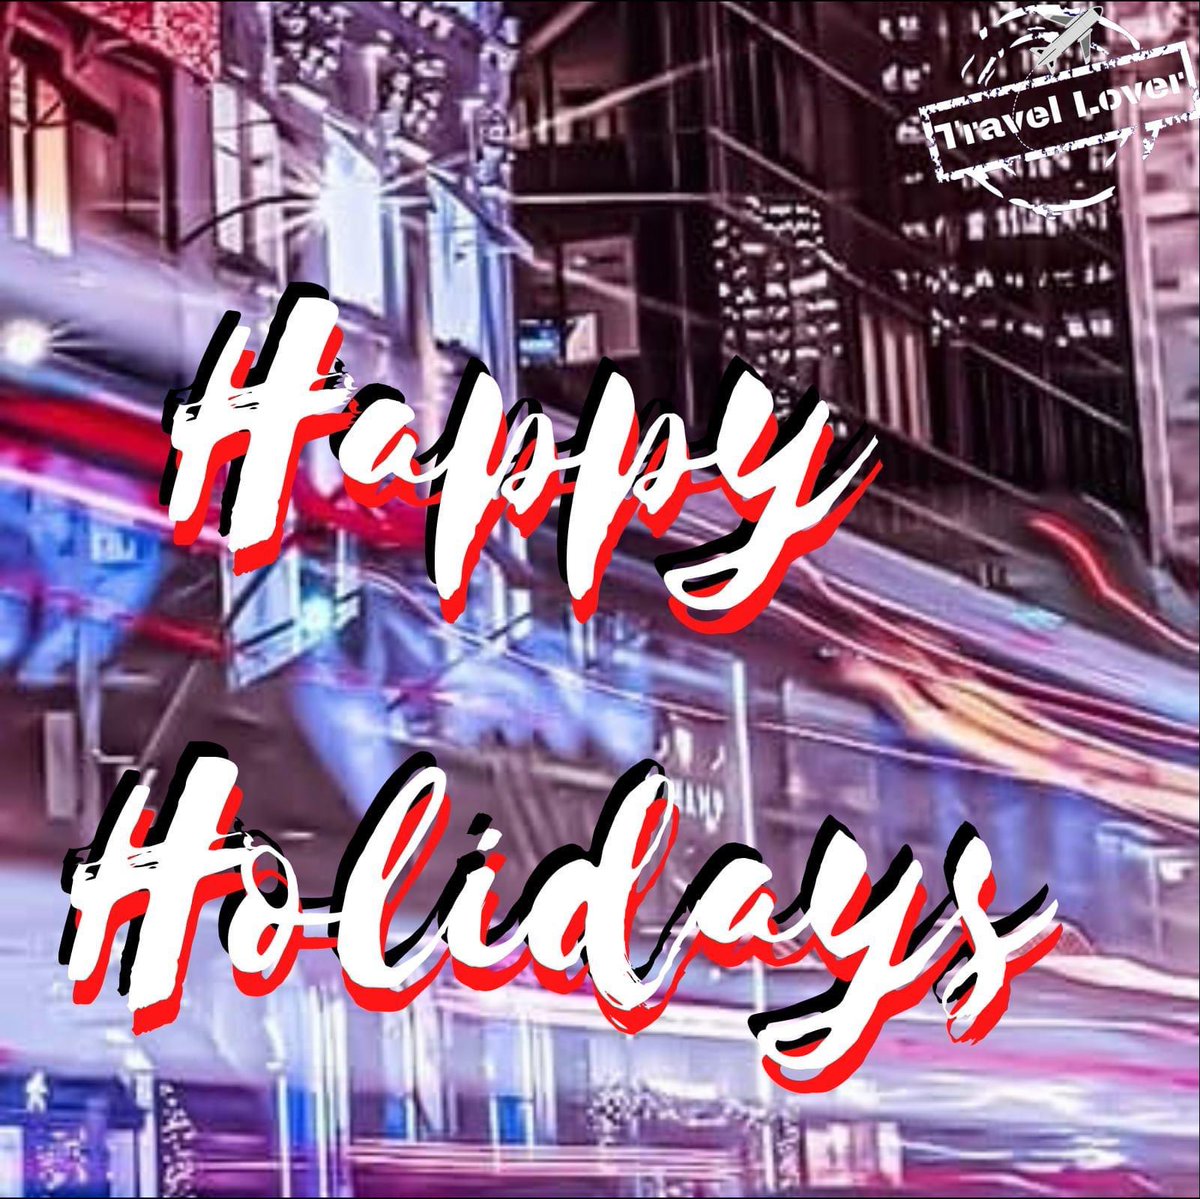 Happy Holidays
-
-
#happyholidays￼ #happyholiday #enjoythemoment #holidaymood #familyvacation #spendingtimetogether #gooddays #holidayseason #allthingschristmas #instachristmas #holidayseason #december #newyork